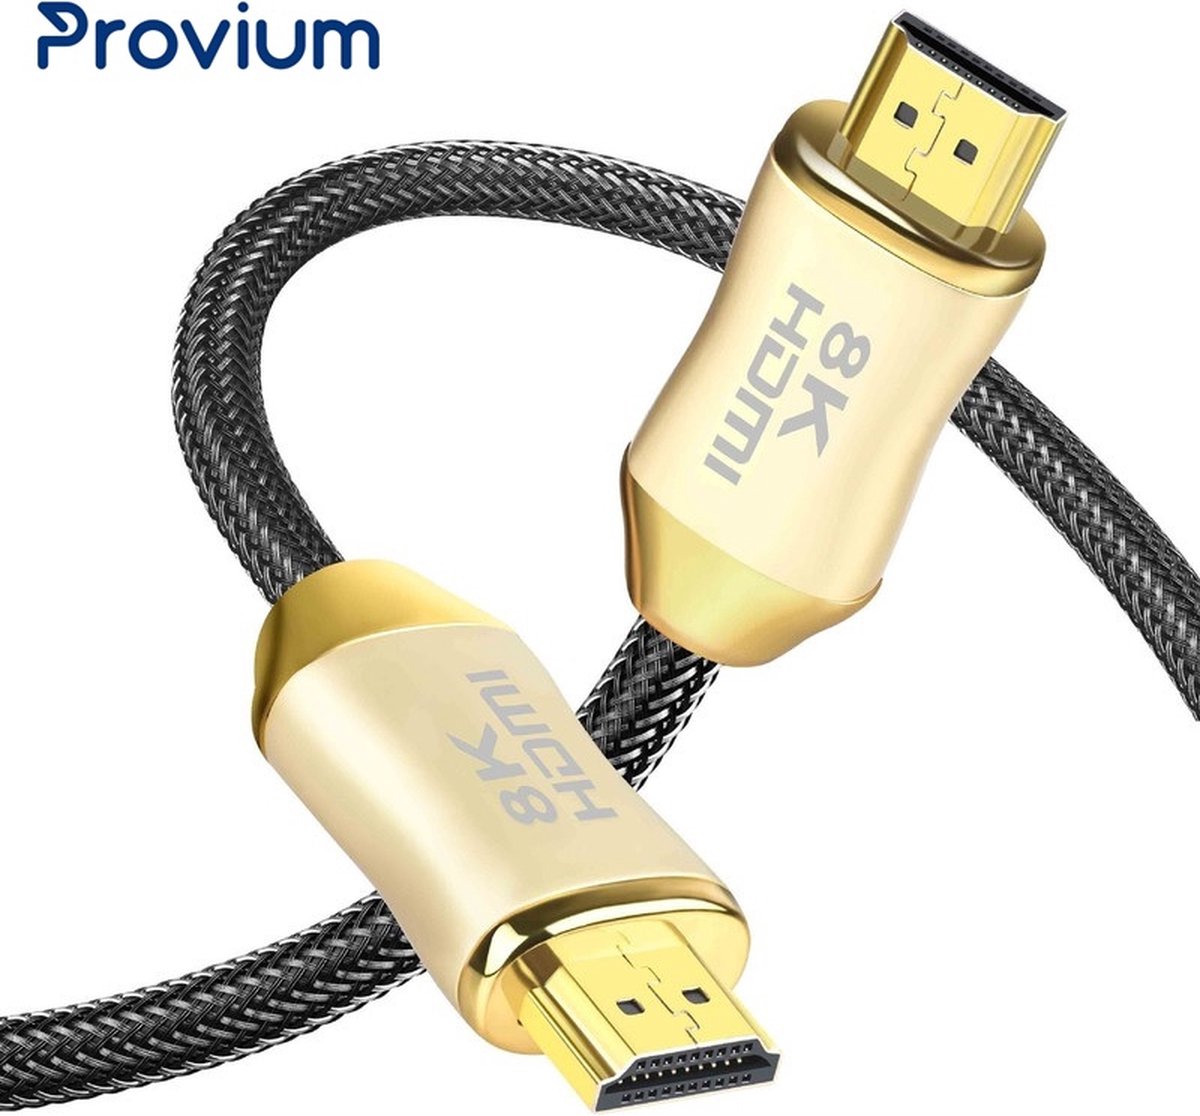 Provium - HDMI 2.1 kabel - Ultra HD 8K - HDMI naar HDMI kabel - voor o.a. PS5 en Xbox Series - verguld - 2 meter - zwart